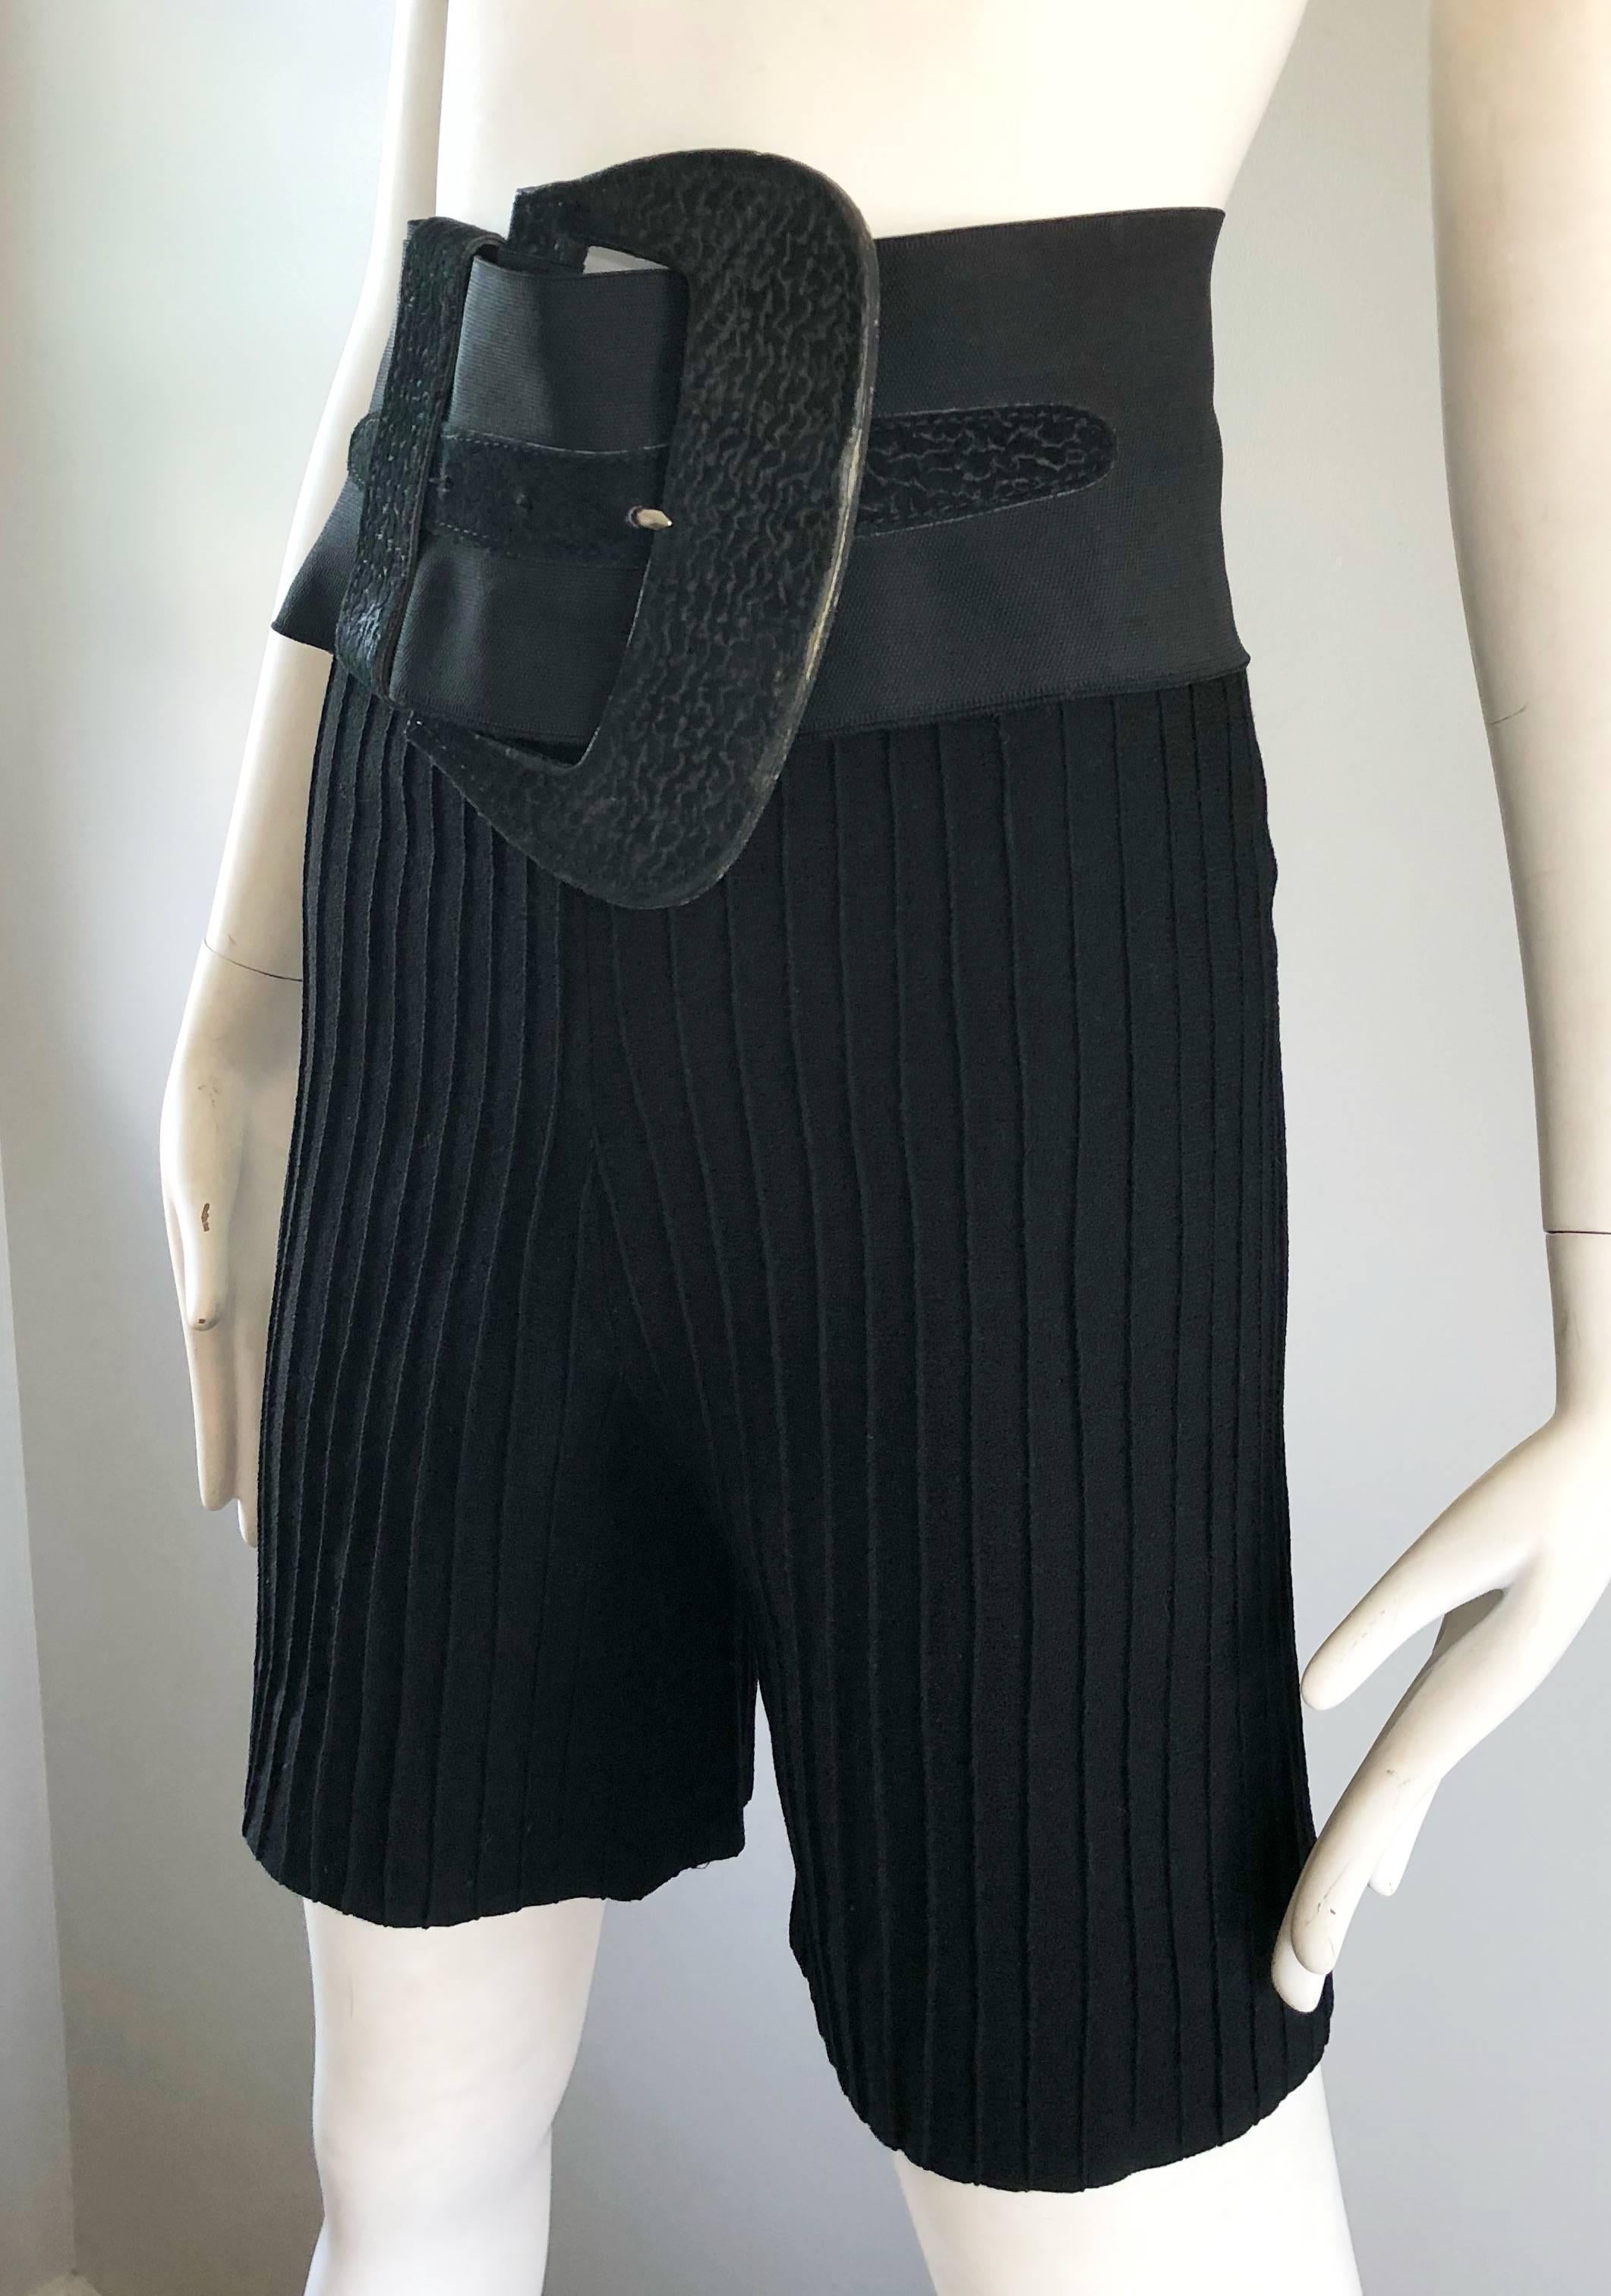 Cardinali Original Sample Black Wool High Waisted 1960s Shorts and Belt Set For Sale 2